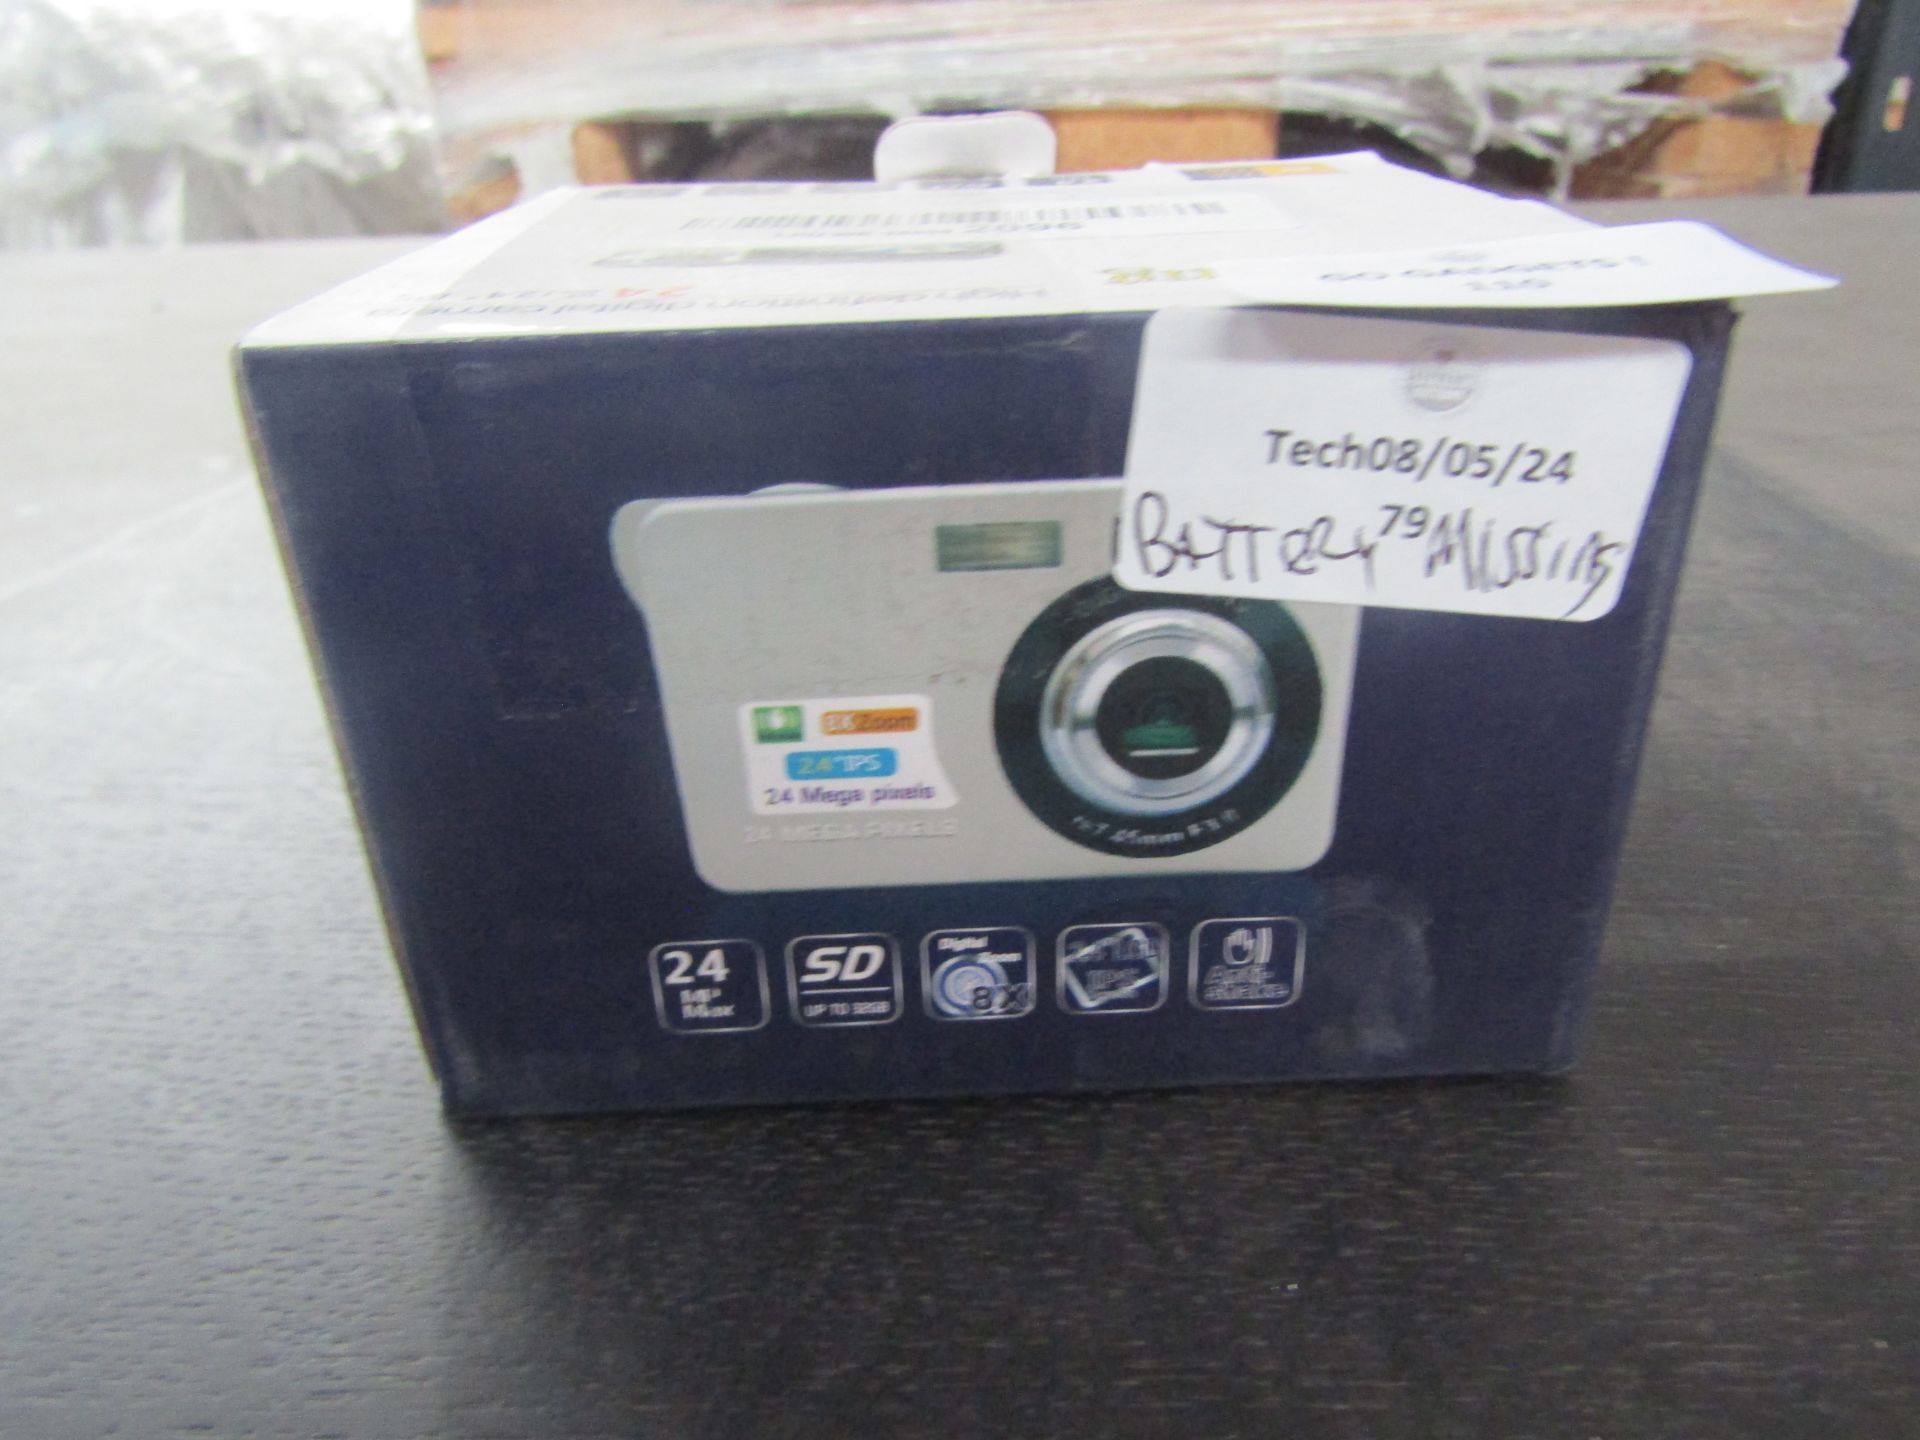 Camking High Definition Digital Camera, 24mp Max, Sd Slot - Battery Missing & Boxed.